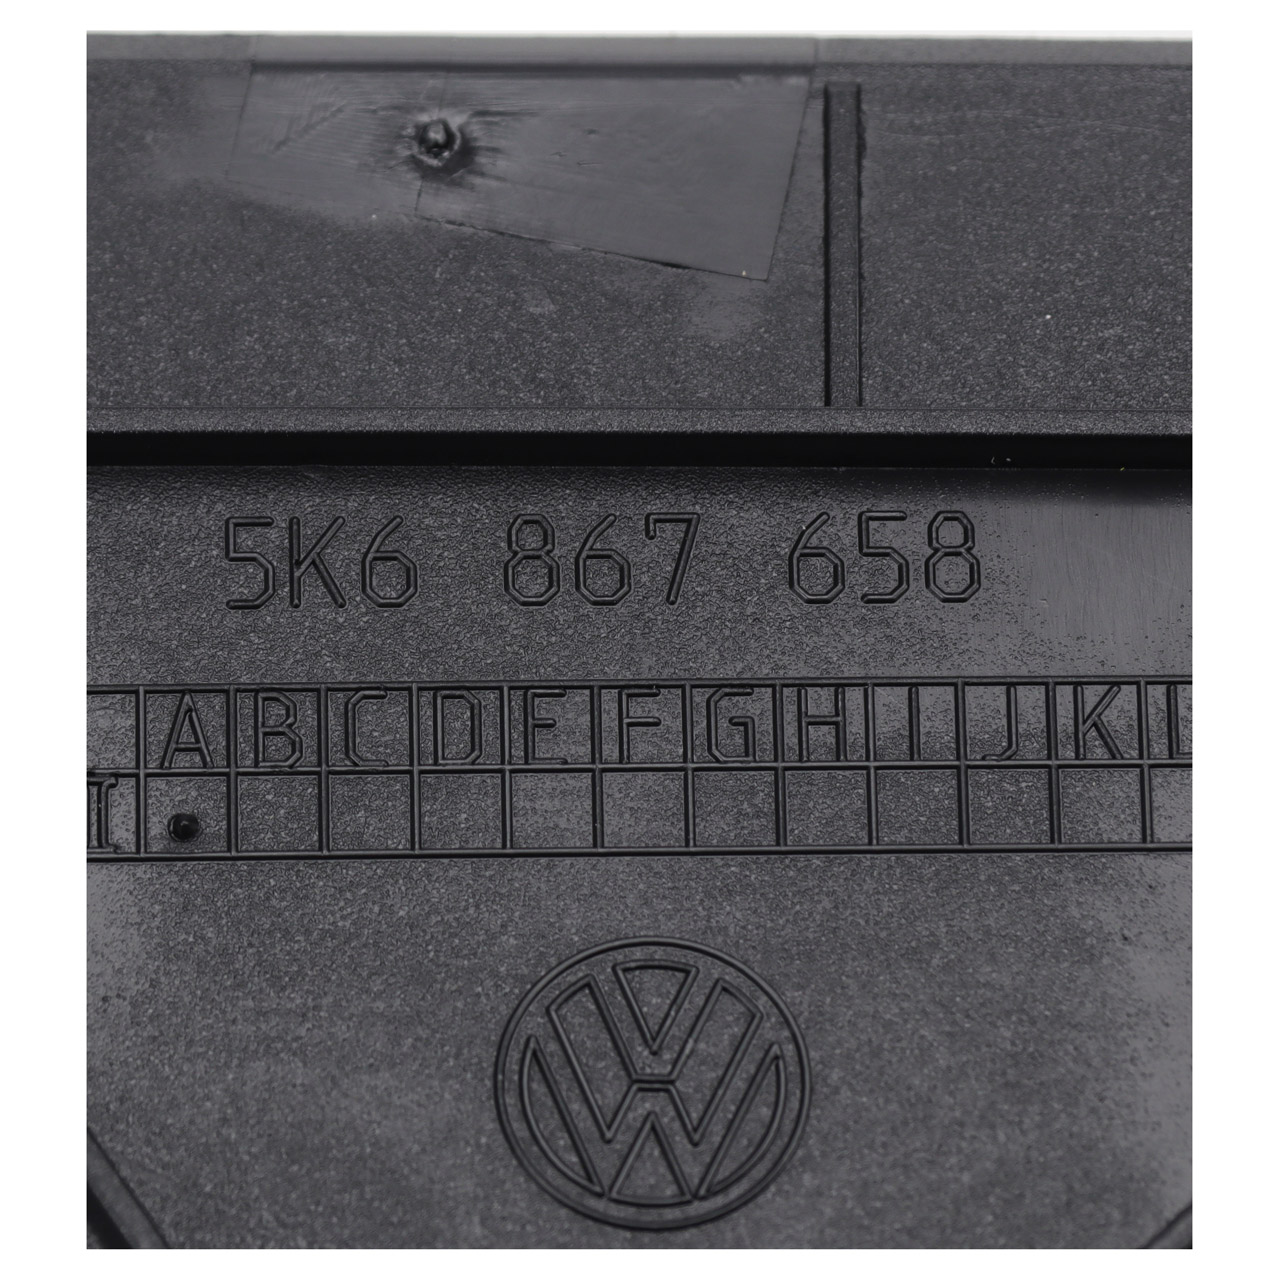 ORIGINAL VW Abdeckung Verkleidung Heckklappe Schwarz Golf 6 rechts 5K6867658 82V